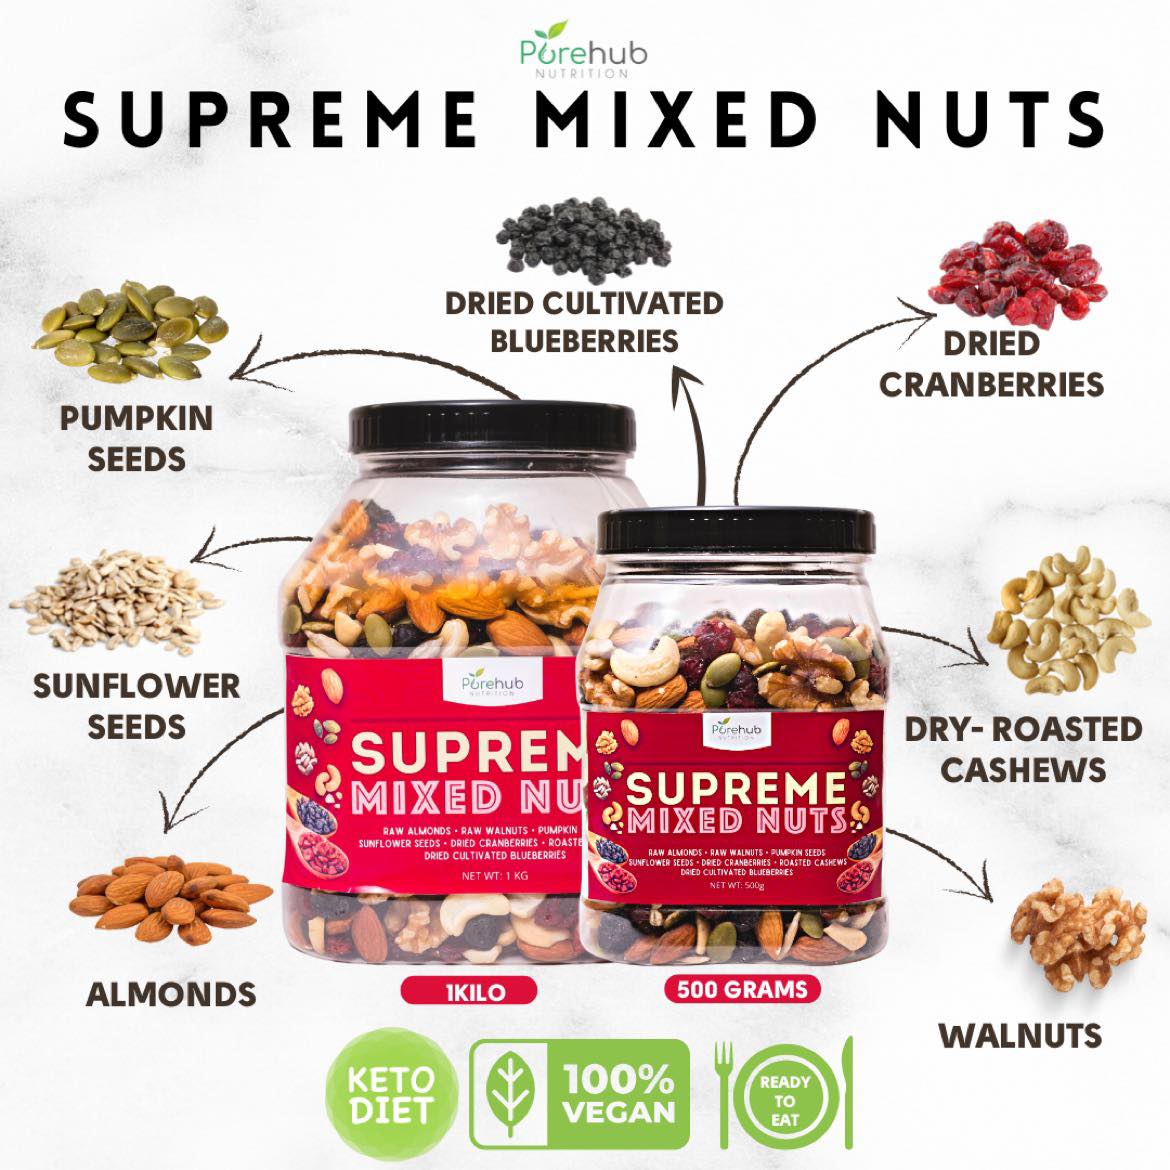 Supreme Mixed Nuts